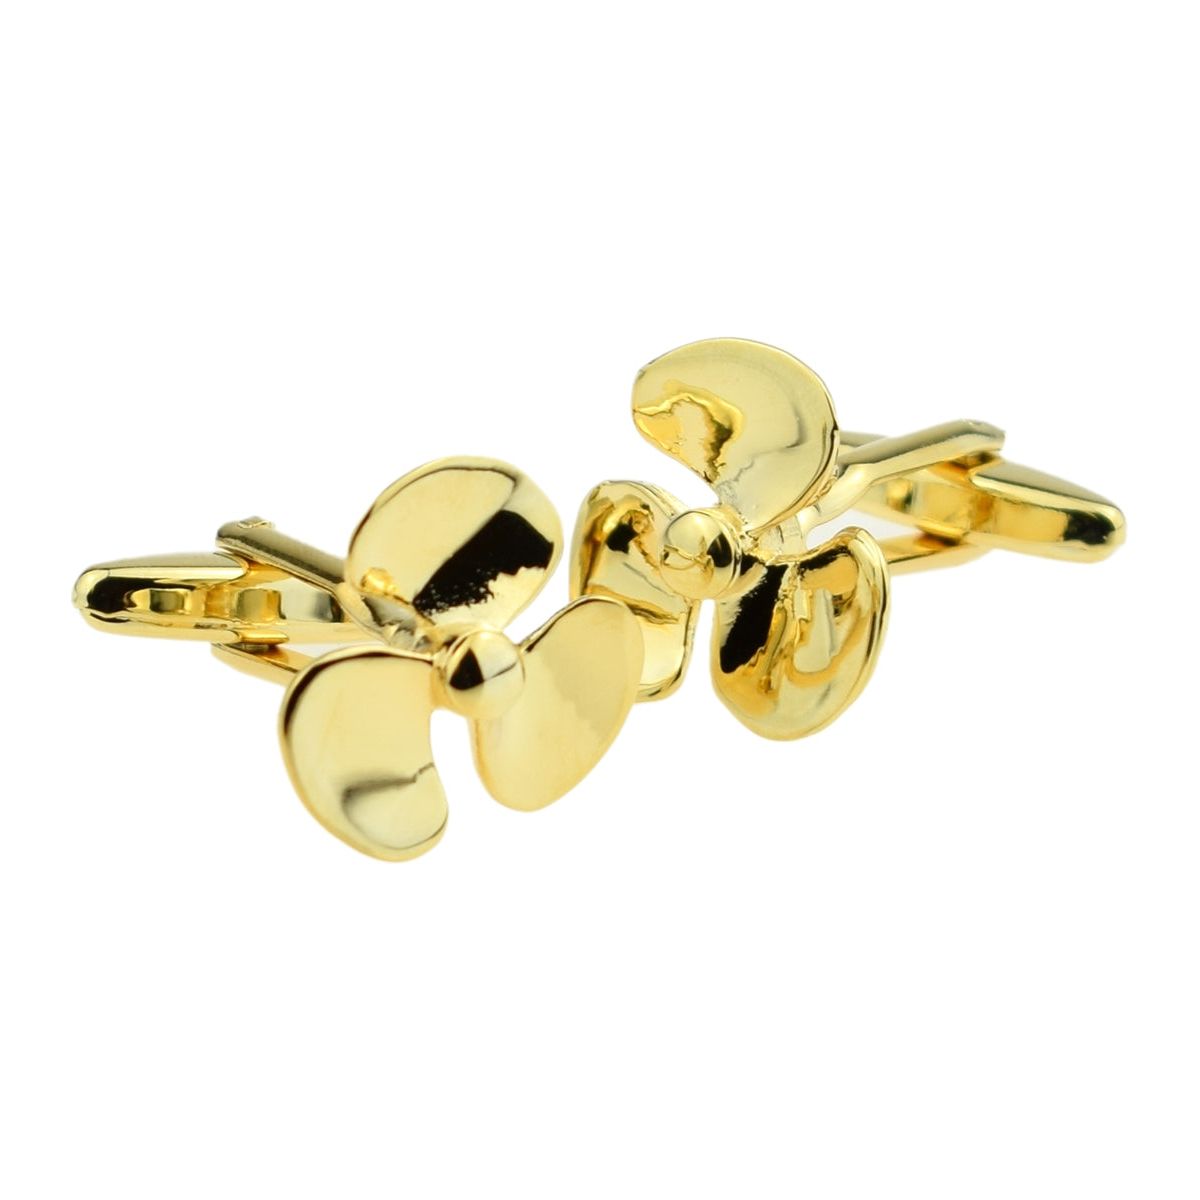 Gold Plated Propeller Design Cufflinks - Ashton and Finch